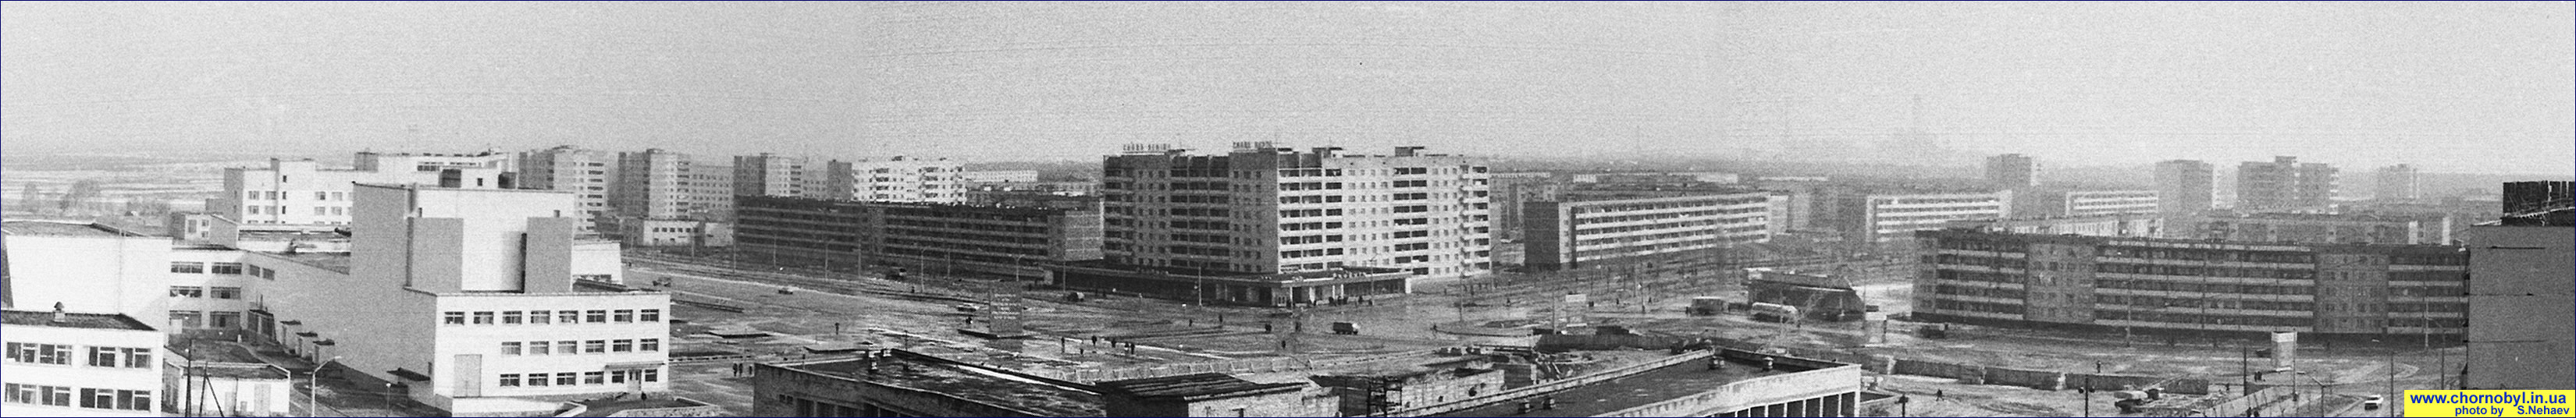 Panorama of central Pripyat